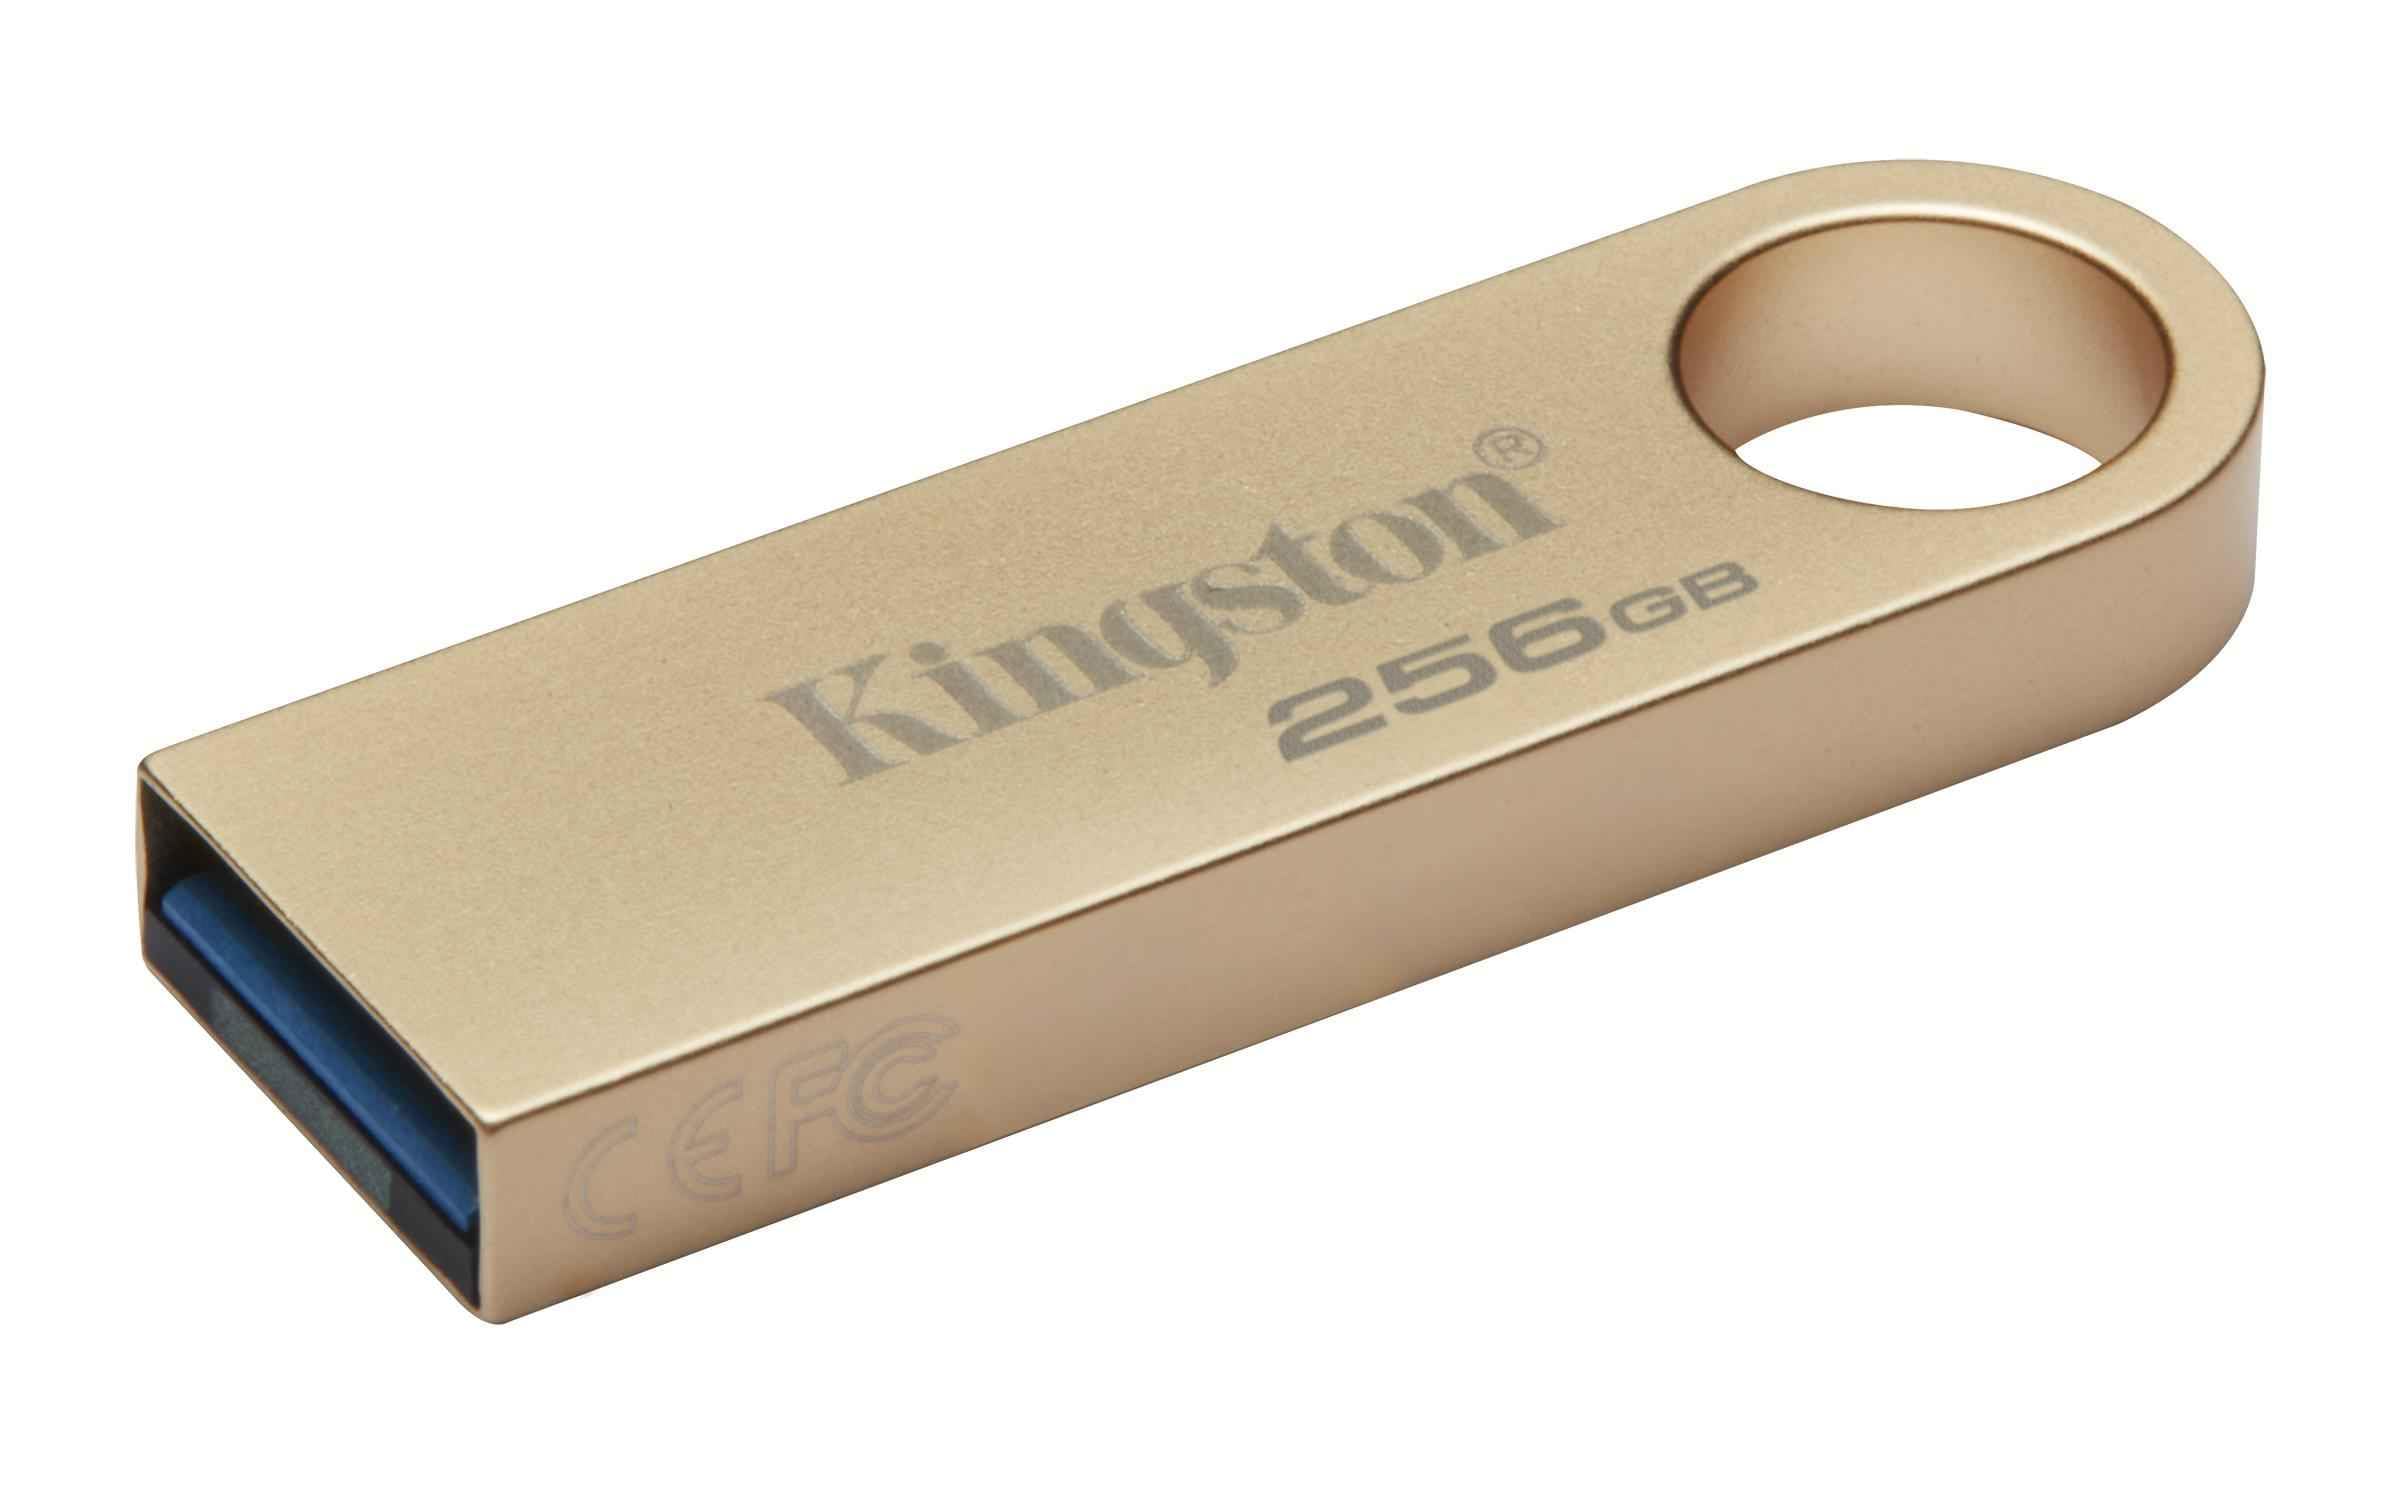 Kingston DataTraveler SE9 G3 256GB USB Flash Drive | USB 3.2 Gen 1 Speed | Up to 220MB/s | Premium Metal Casing | DTSE9G3/256GB